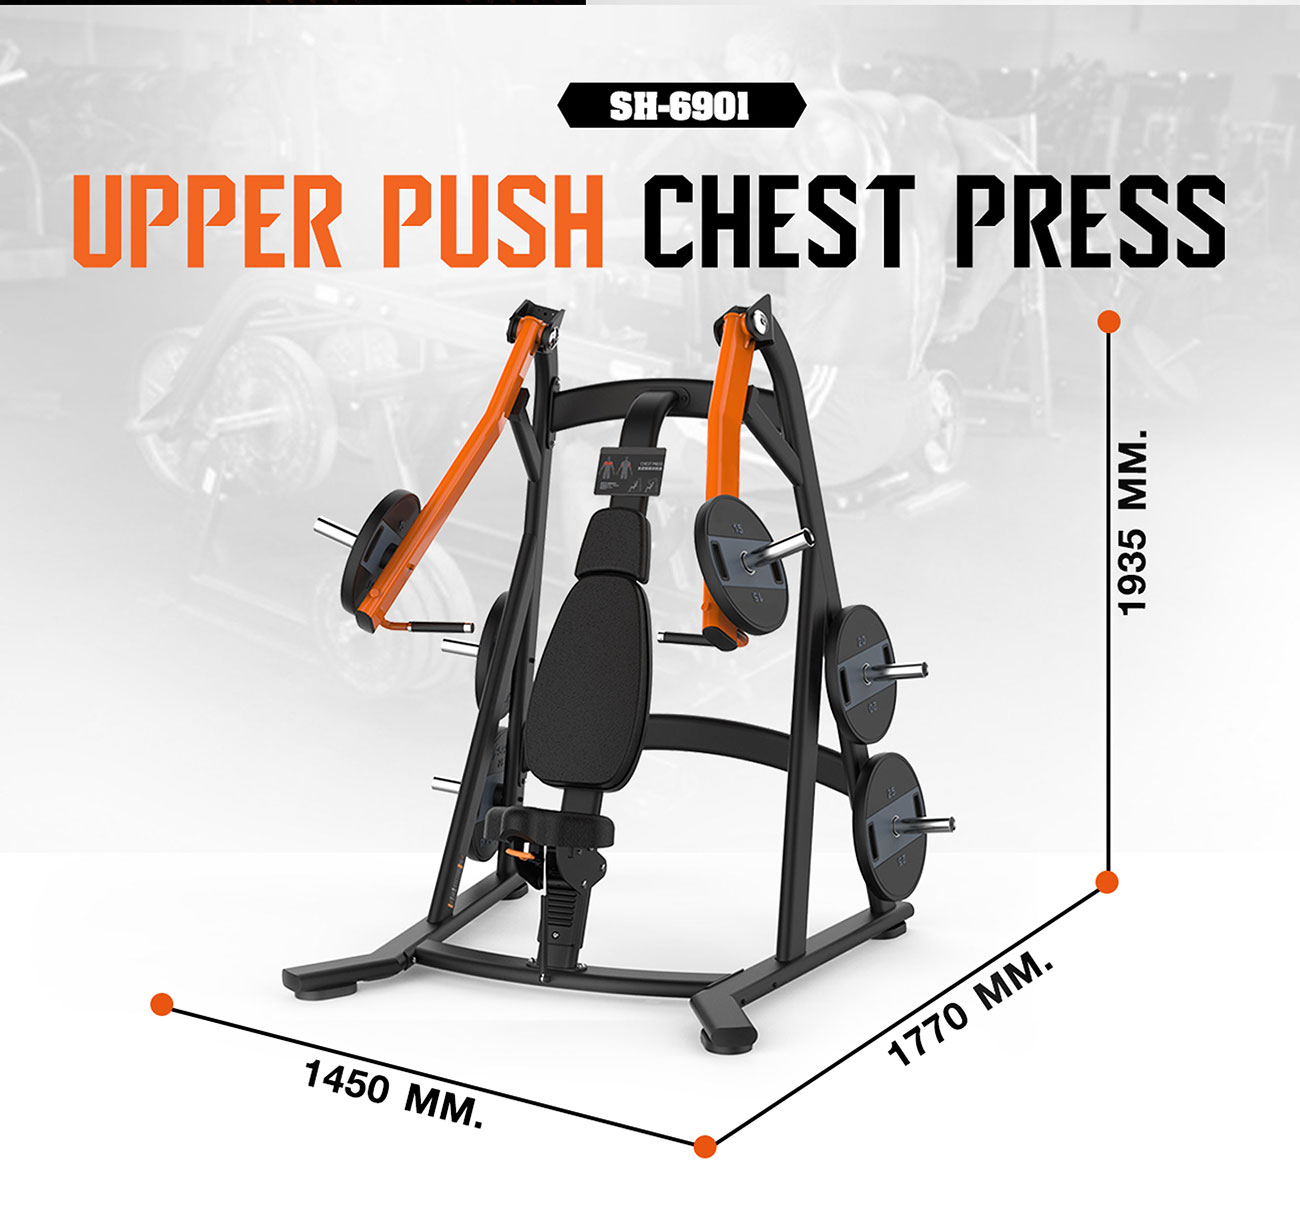 Upper push chest press เครื่องบริหารกล้ามเนื้ออกส่วนกลาง (จับบน)SH-6901